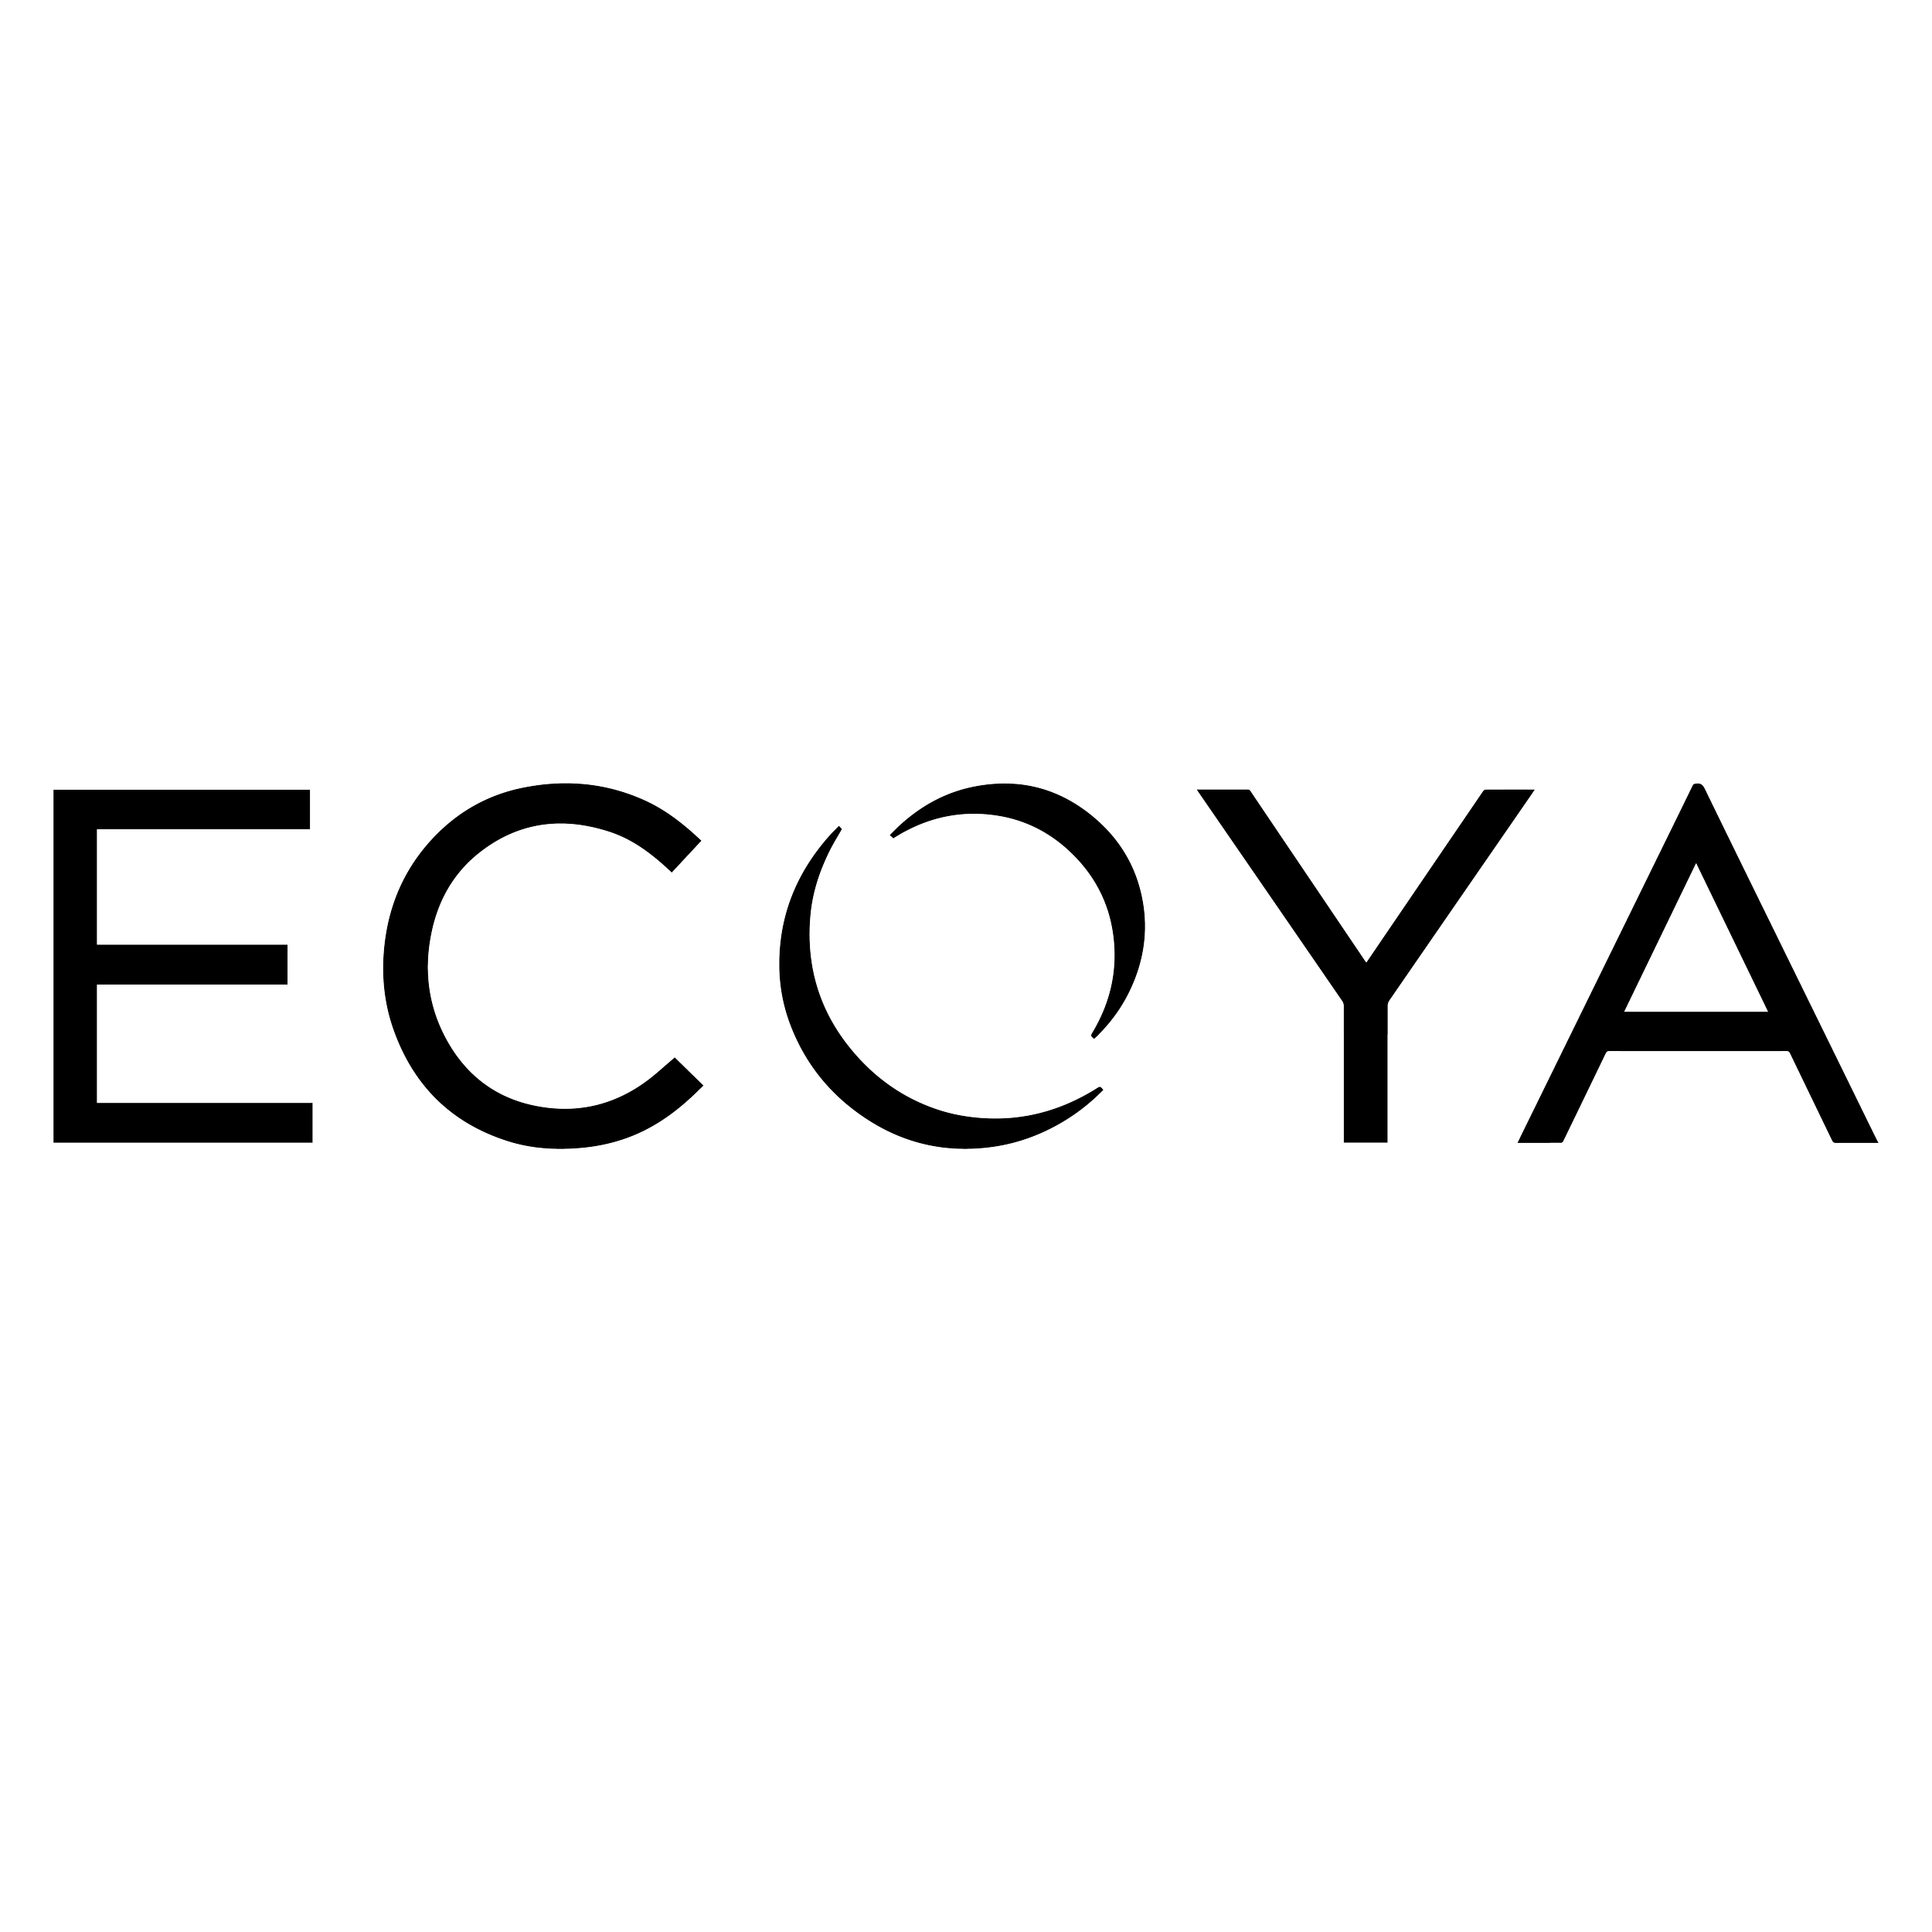 Ecoya logo.png